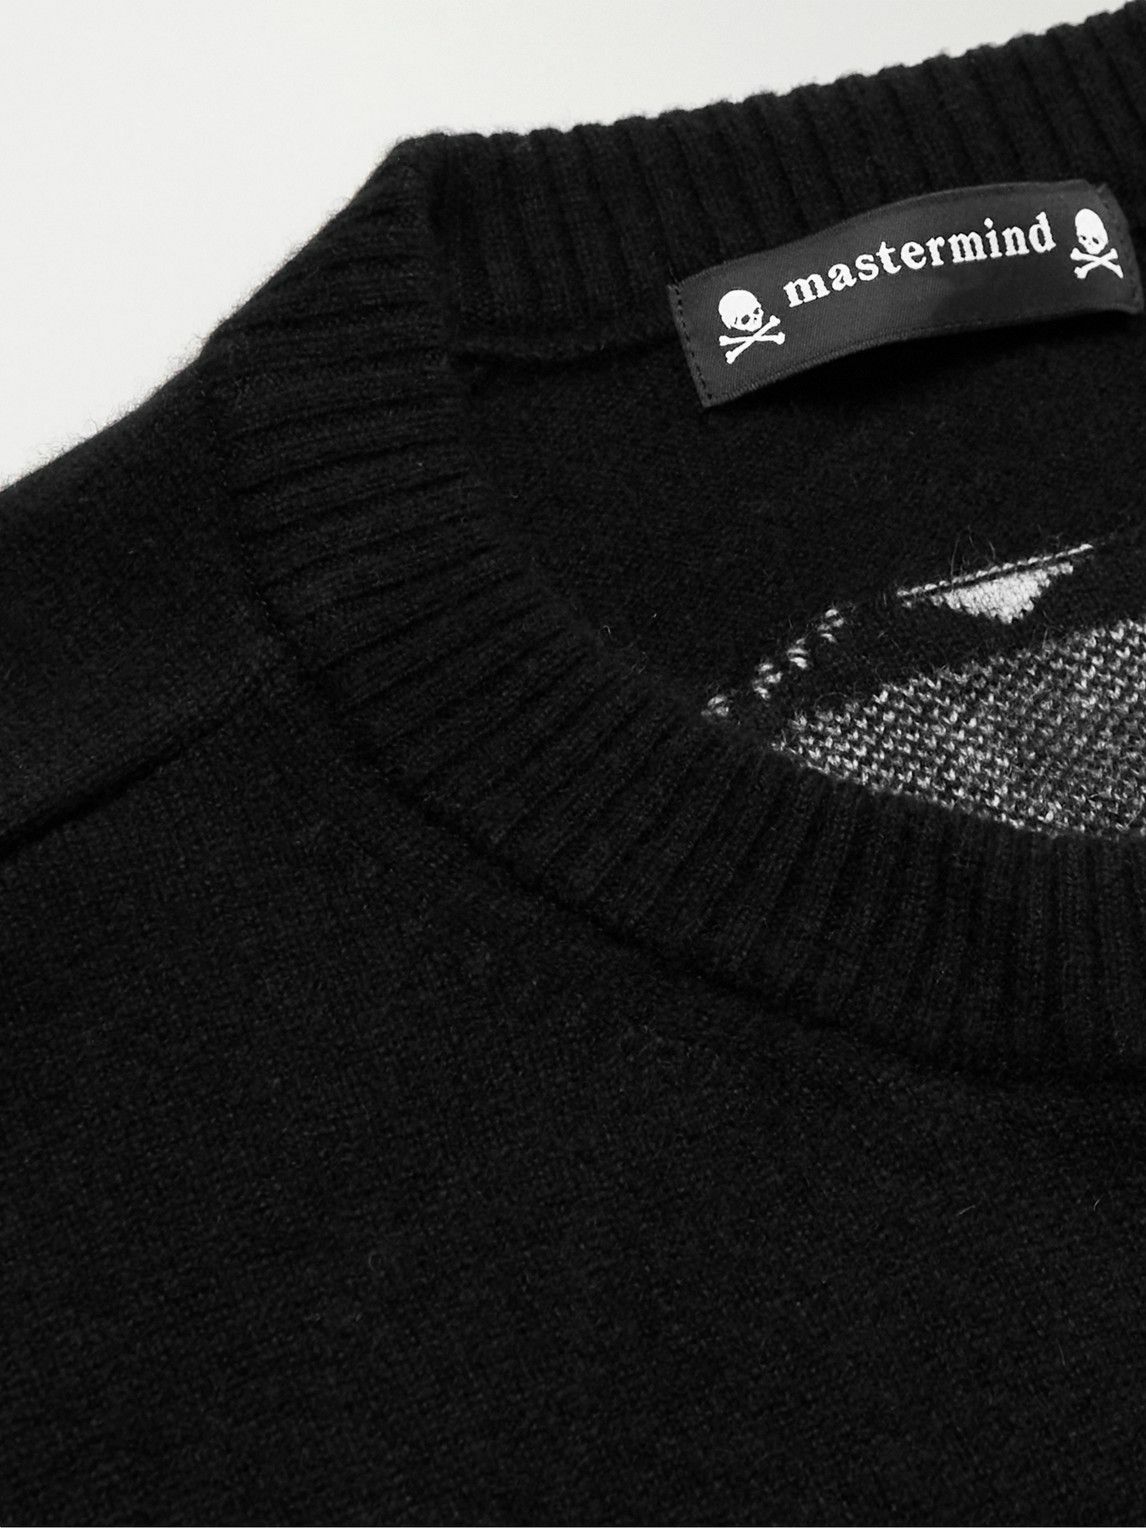 Mastermind World - Intarsia-Knit Cashmere Sweater - Black MASTERMIND WORLD